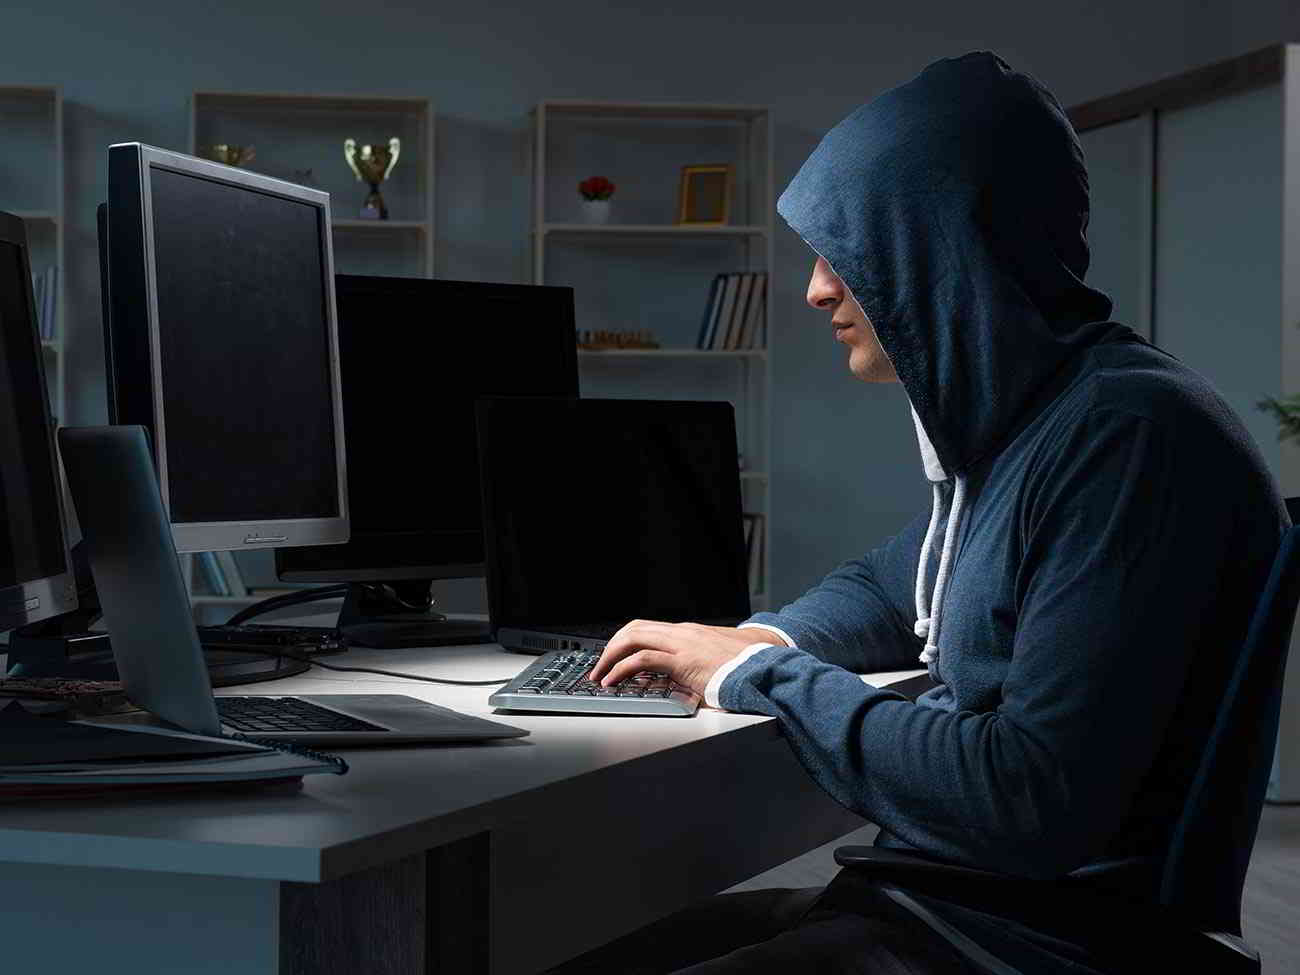 man committing online fraud